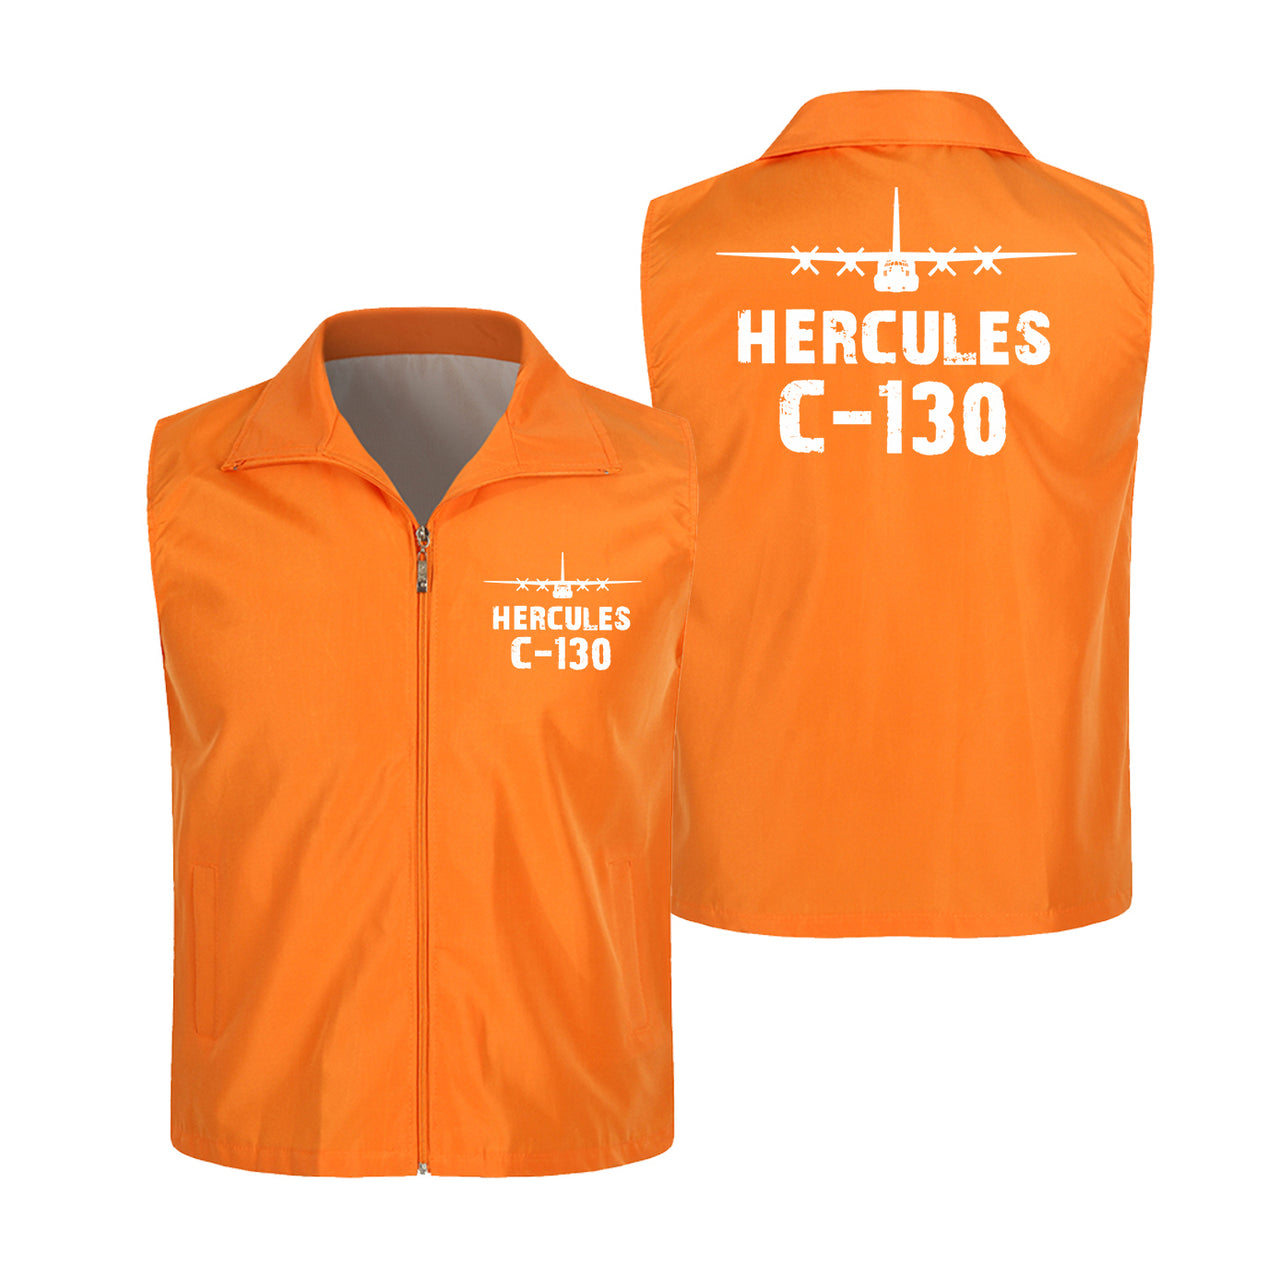 Hercules C-130 & Plane Designed Thin Style Vests